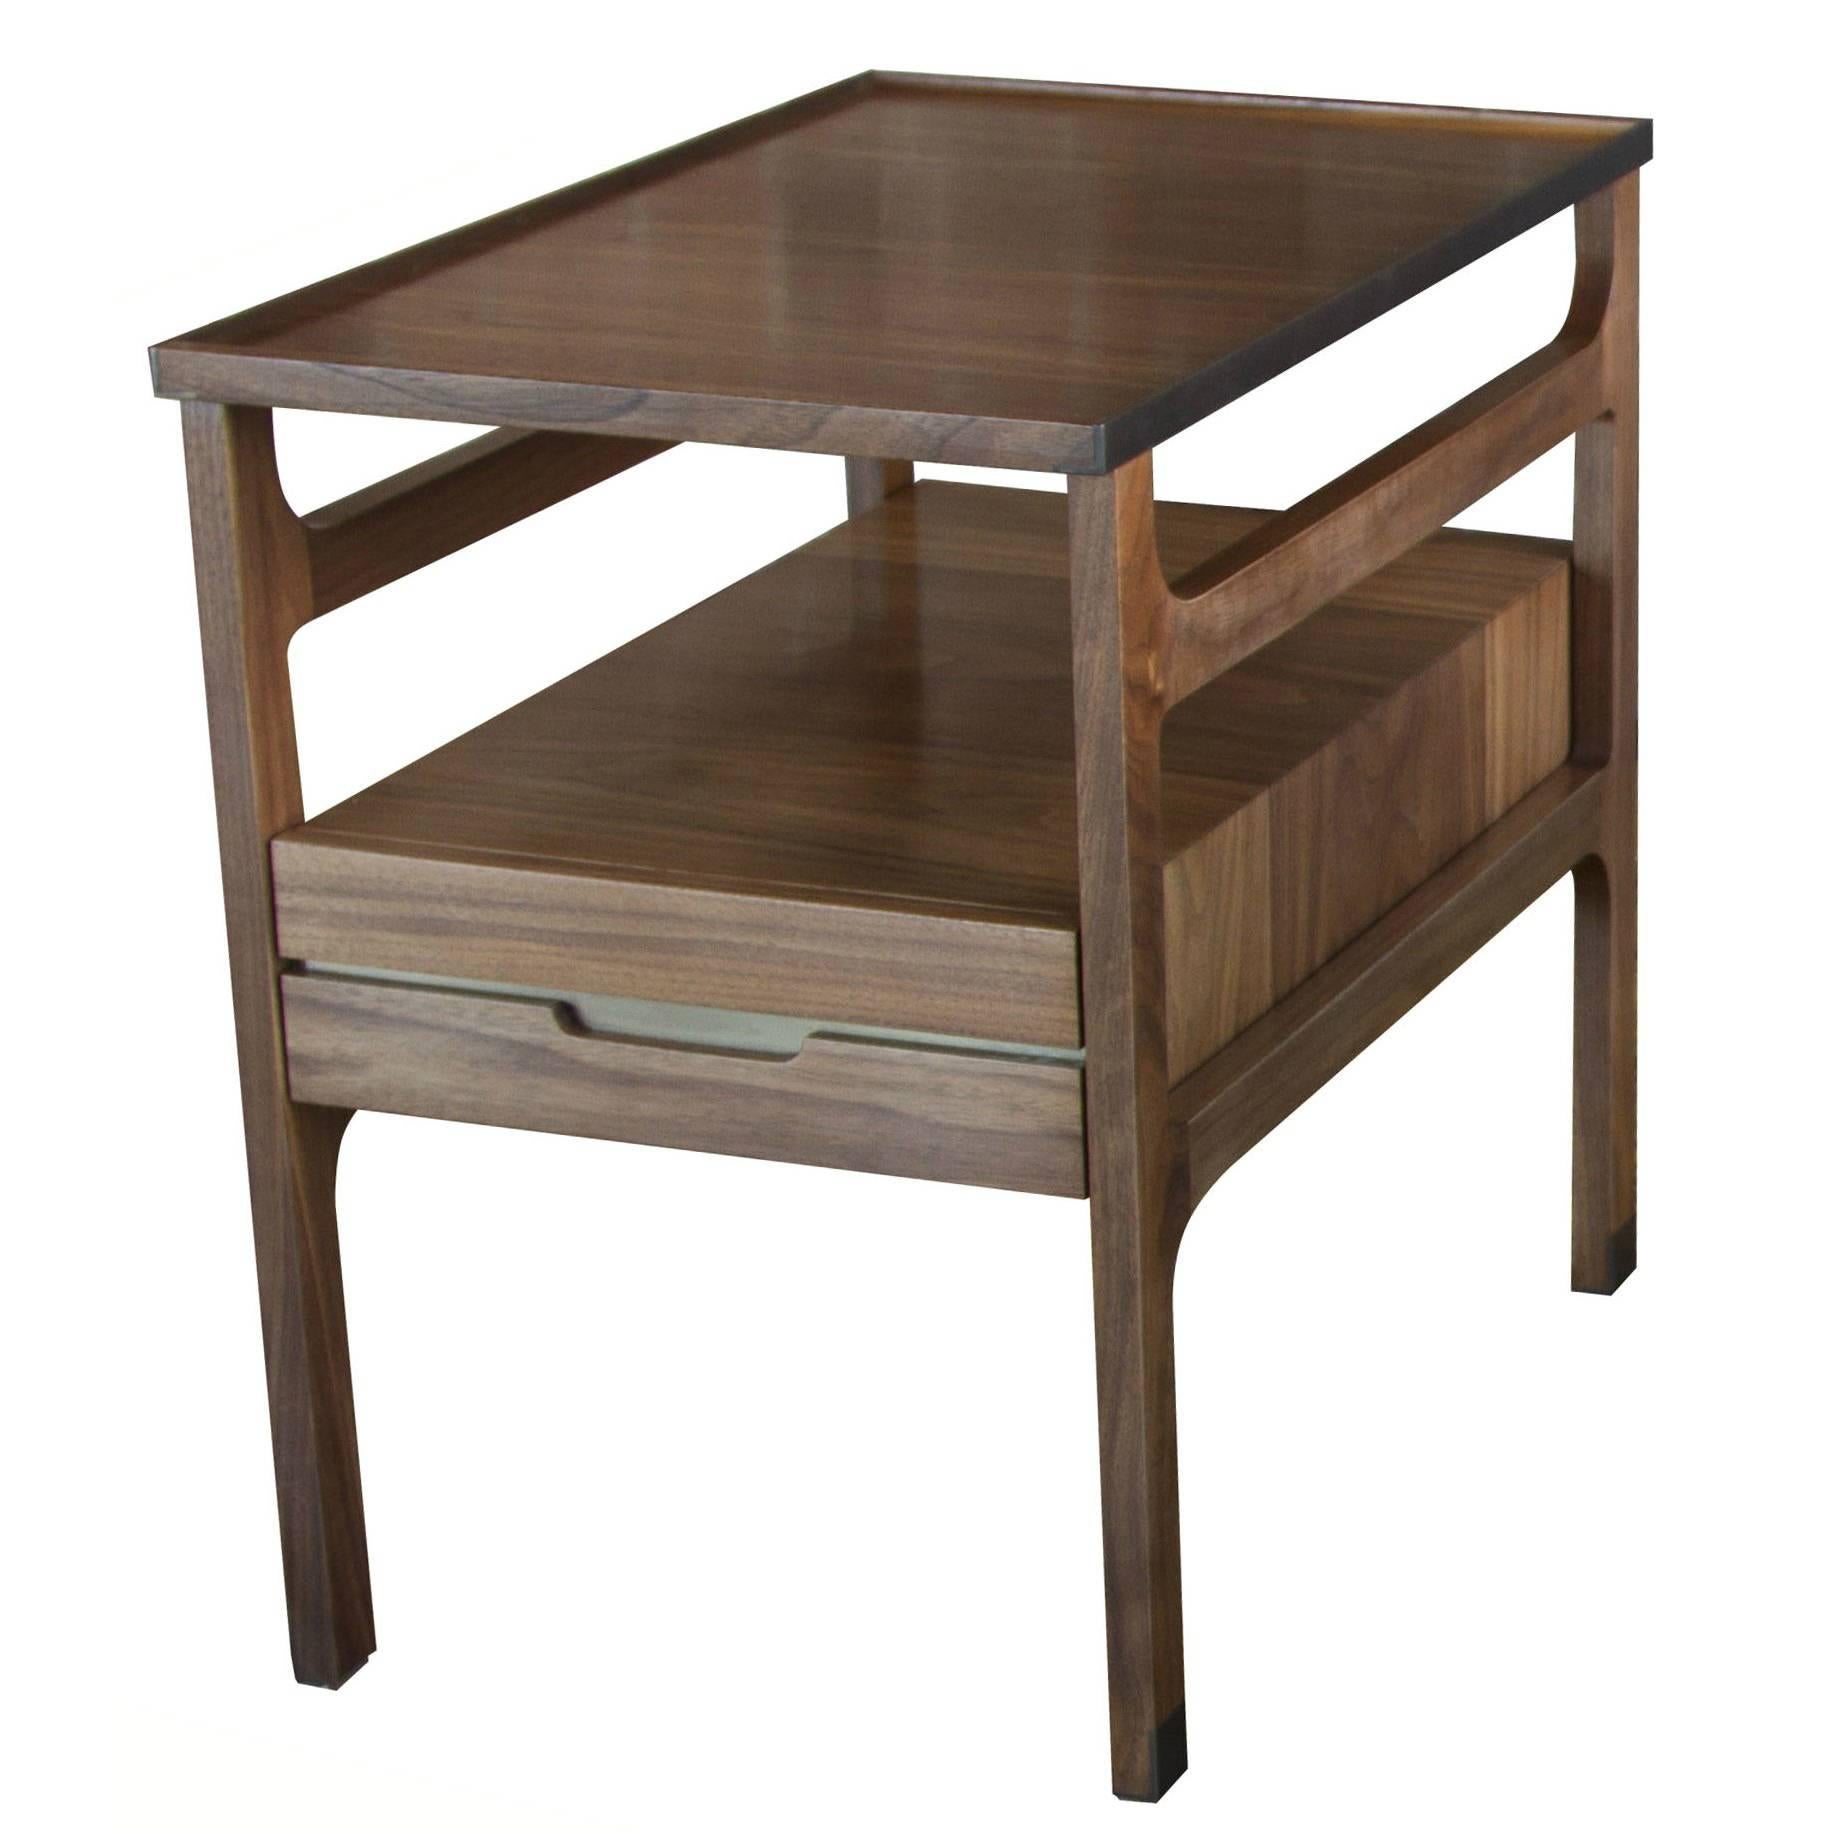 Tiernan Side Table - handcrafted by Richard Wrightman Design